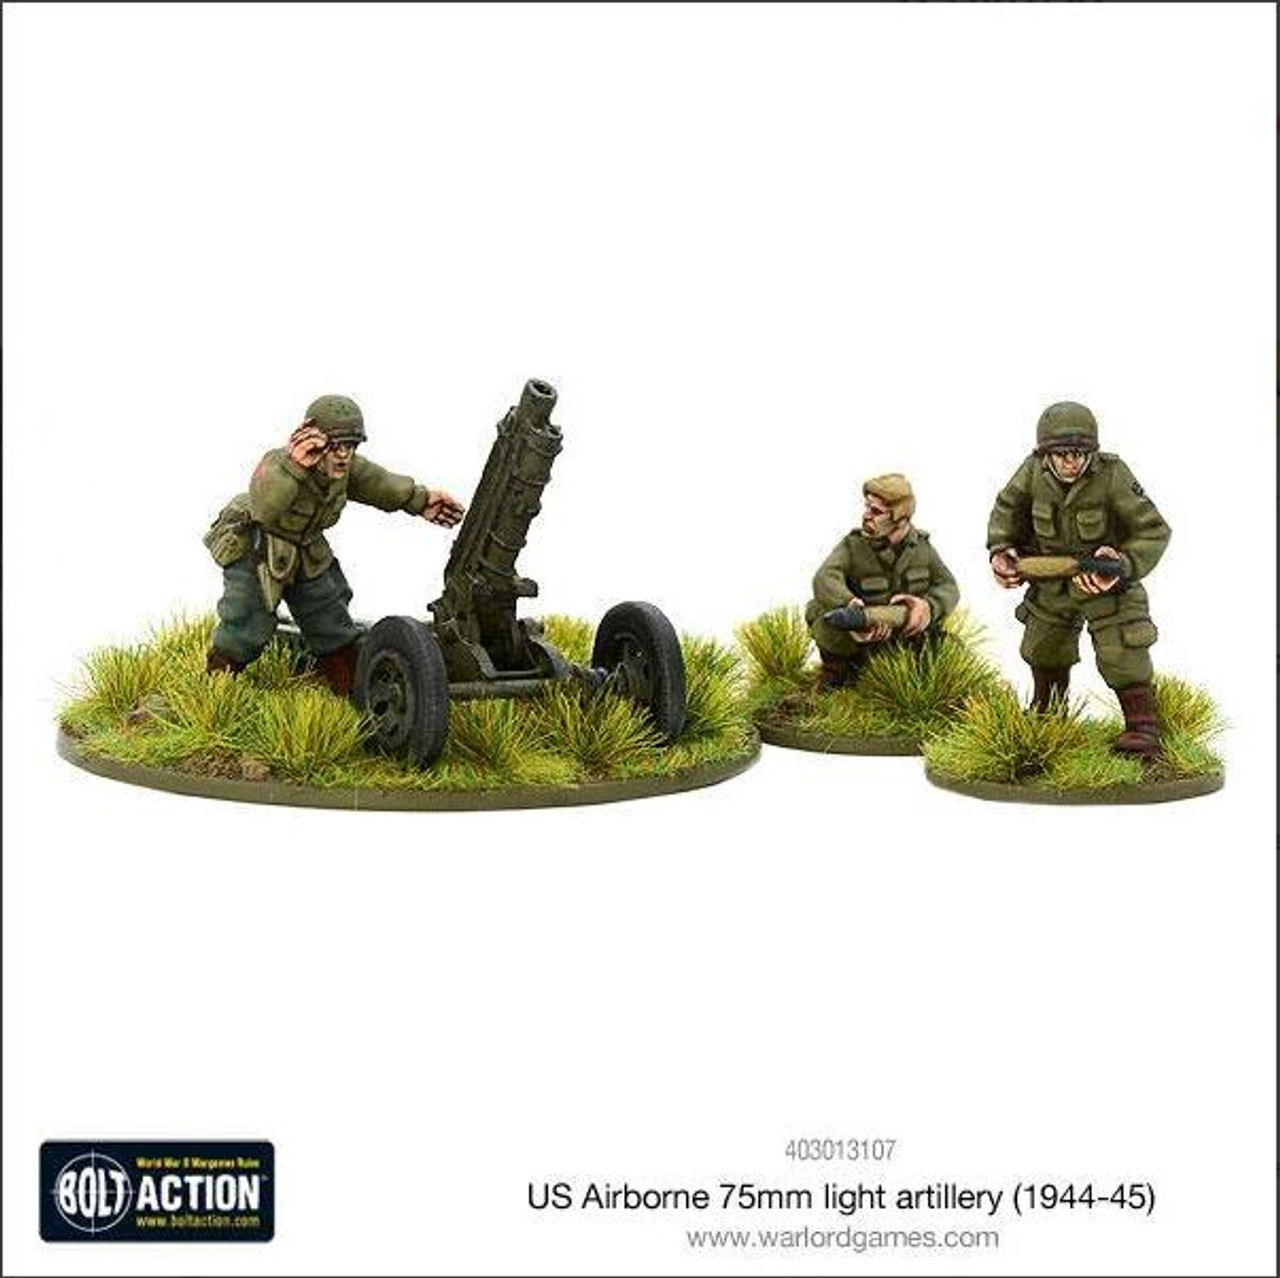 US Airborne 75mm Light Artillery (1944-45) - 403013107